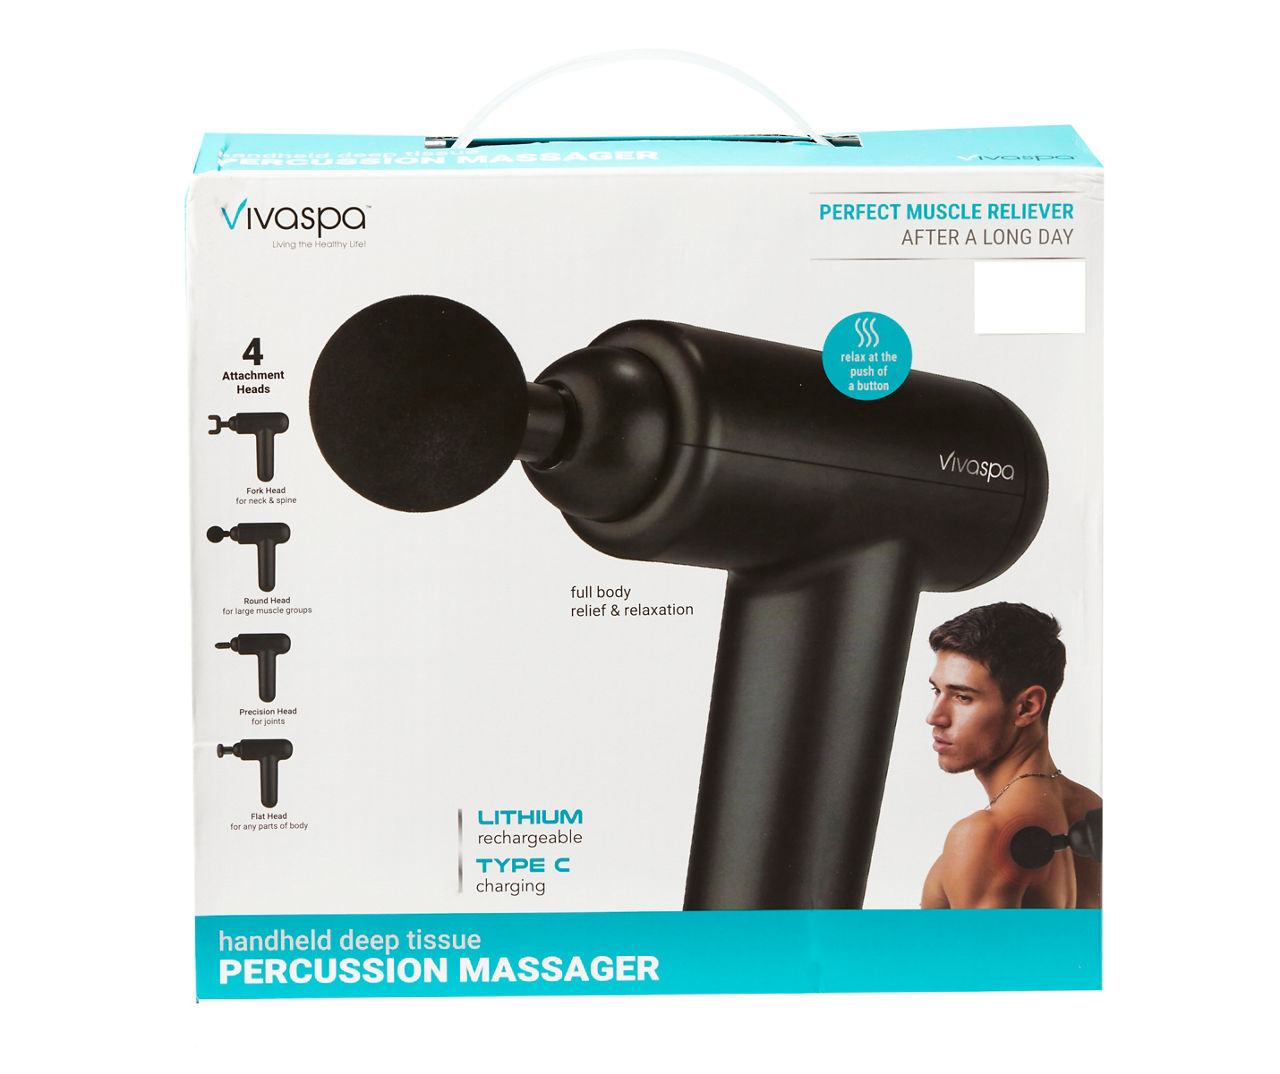 Cordless Handheld Deep Tissue Muscle Massager